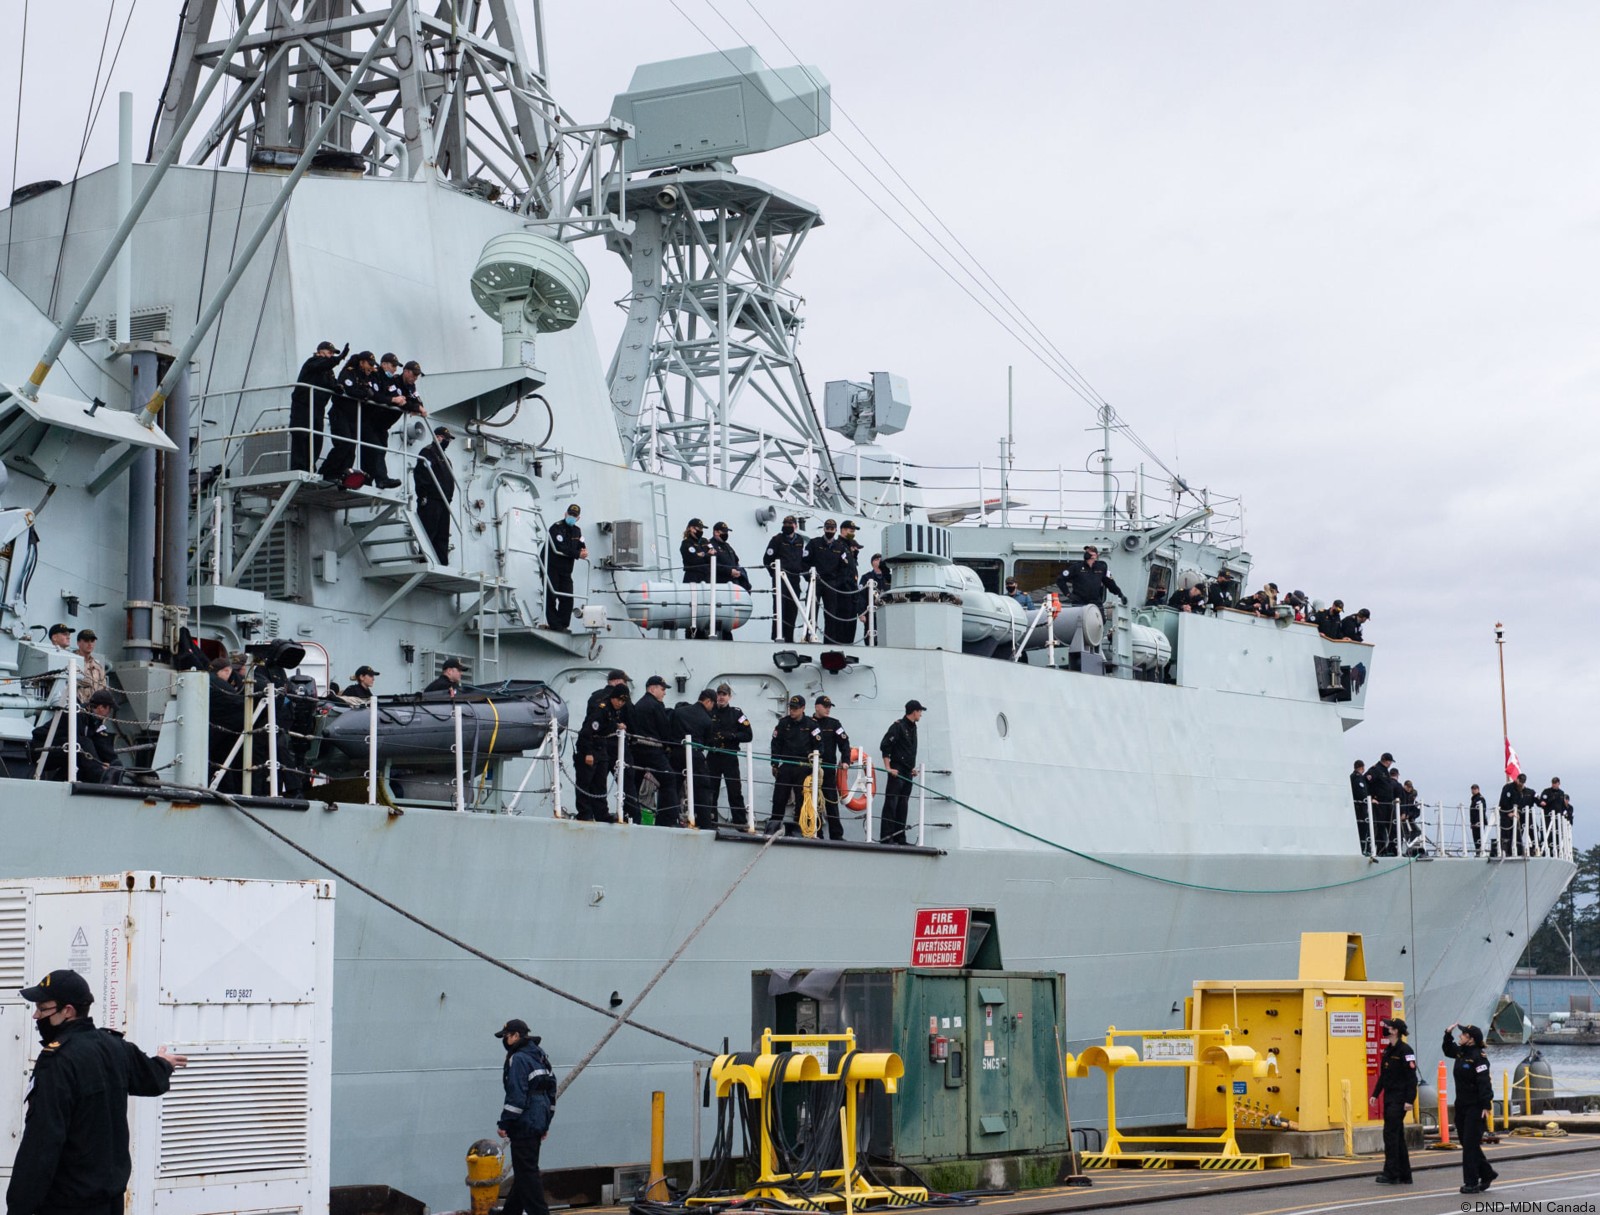 ffh-338 hmcs winnipeg halifax class helicopter patrol frigate ncsm royal canadian navy 44